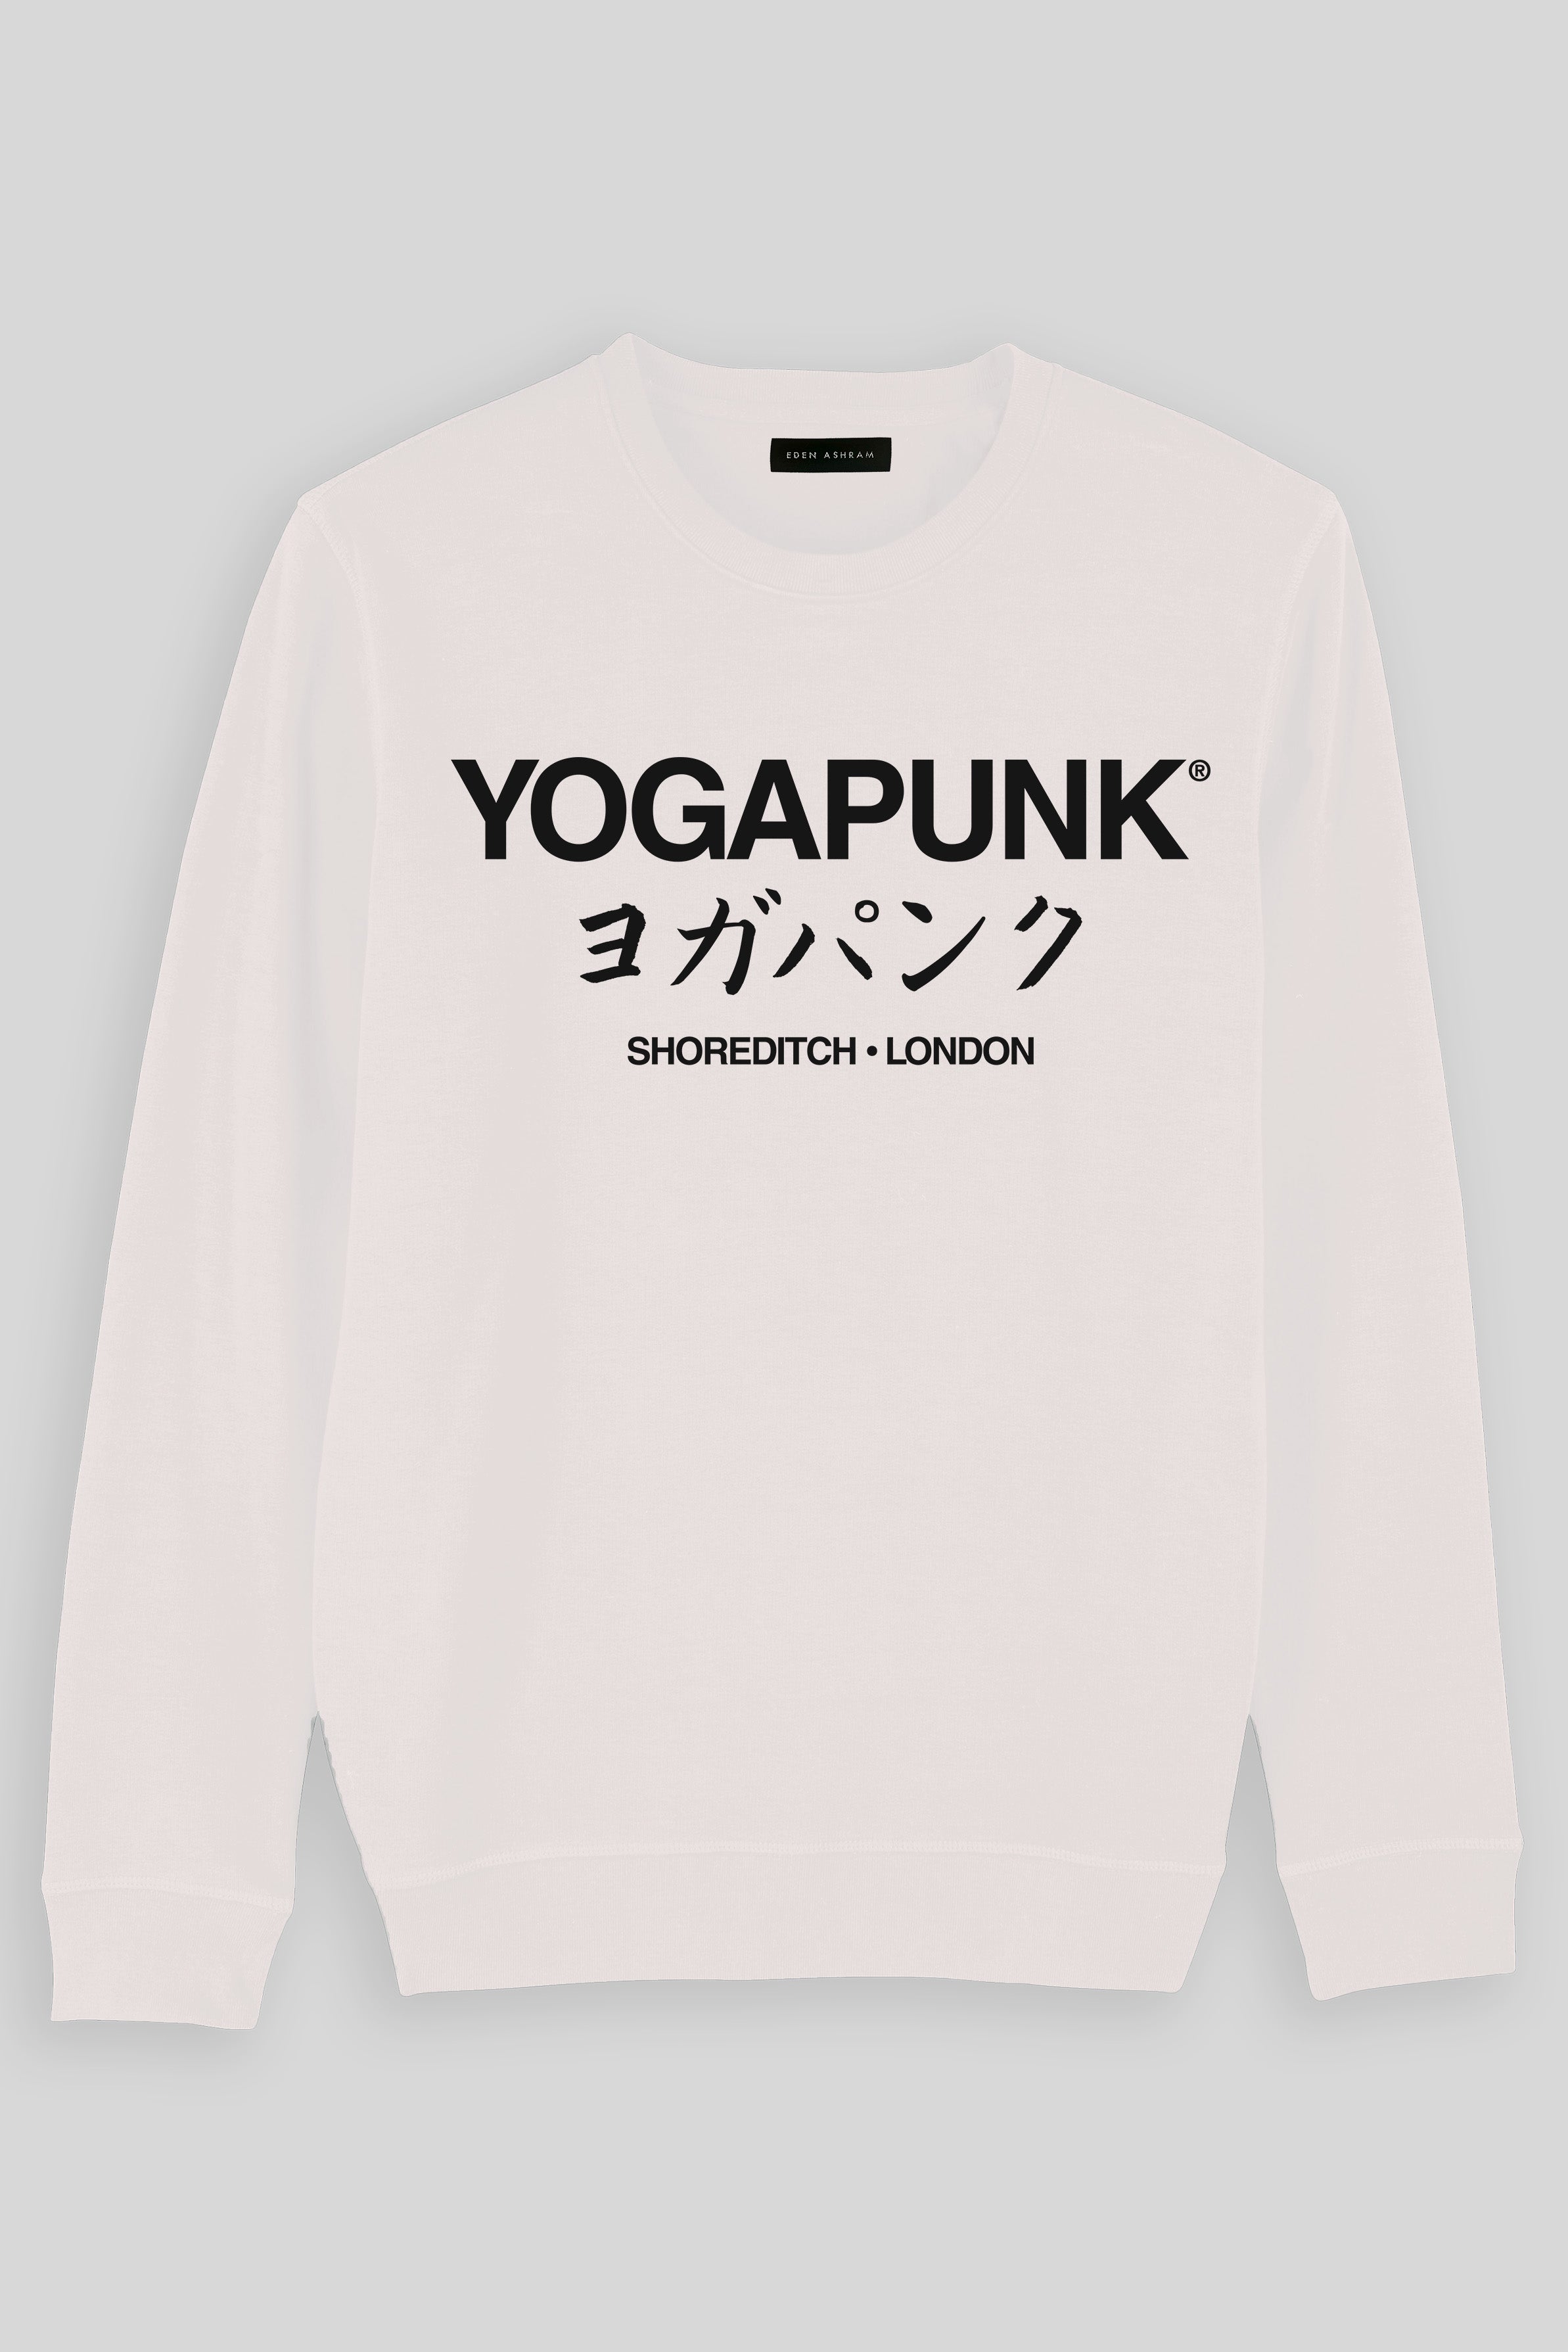 Eden Ashram Yoga Punk® Shoreditch Premium Crew Neck Sweatshirt Vintage White